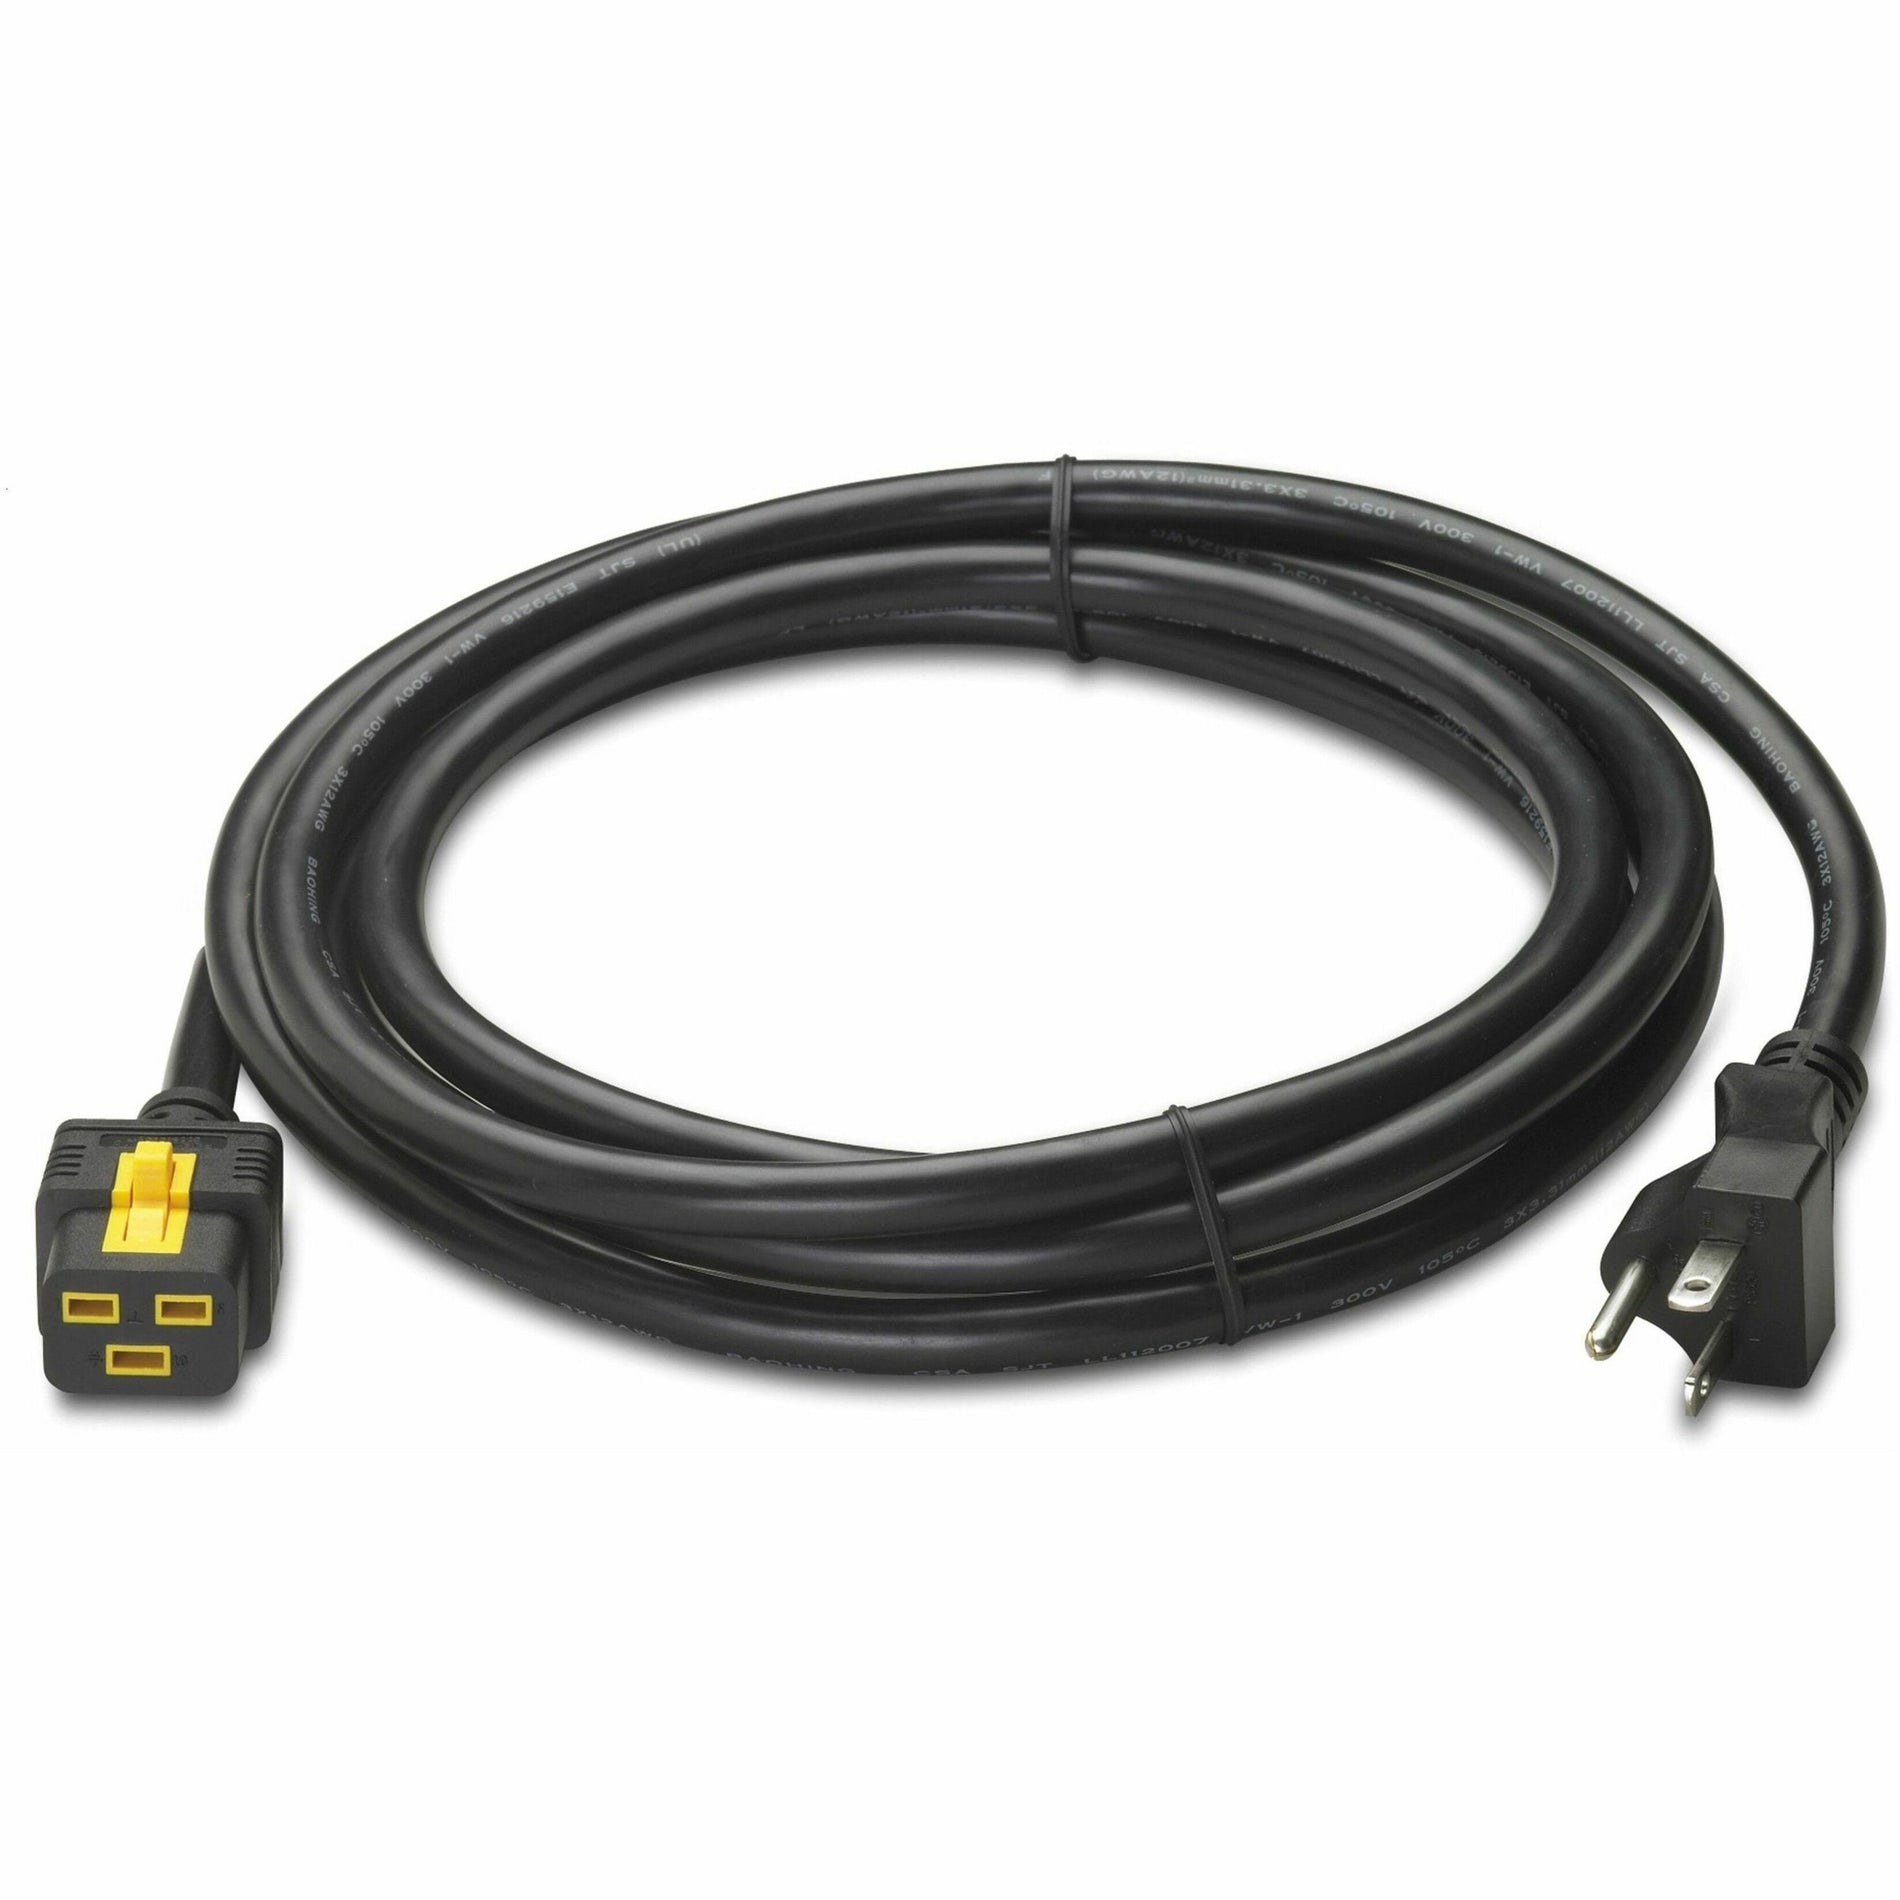 APC AP8751 Standard Power Cord - Black, 9.84 ft Cord Length